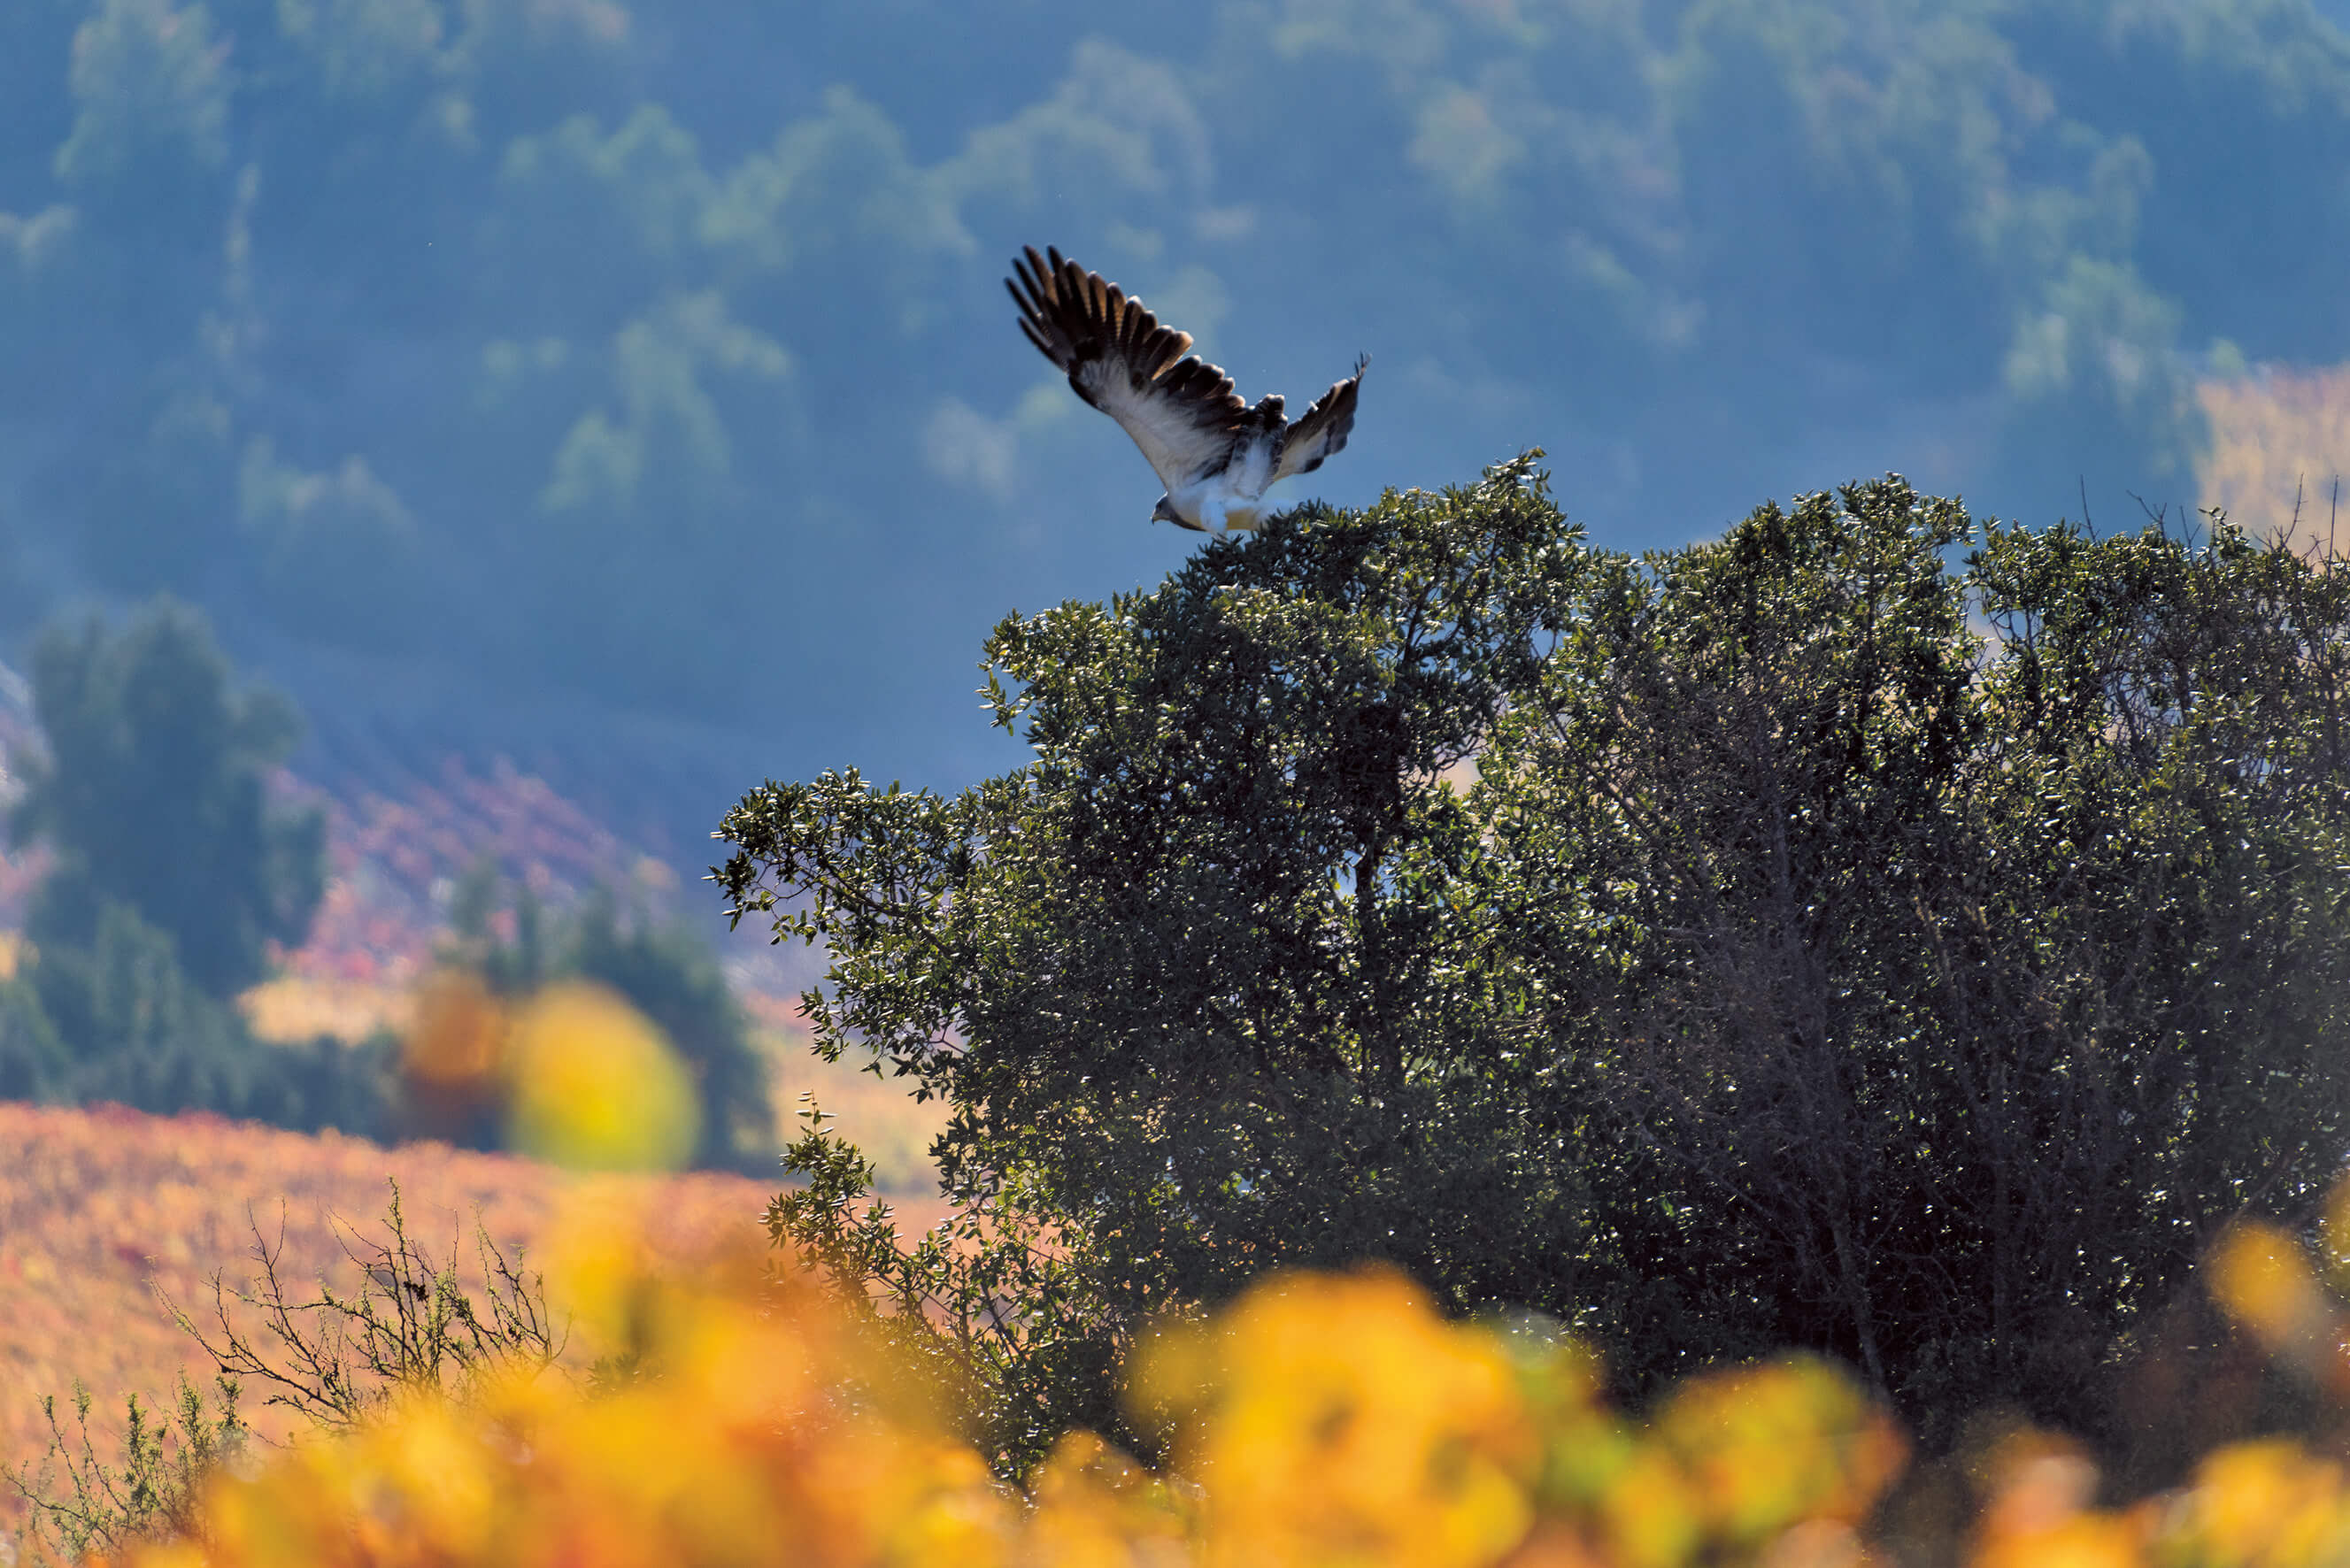 Bird of prey takes flight in a Caliterra vineyard